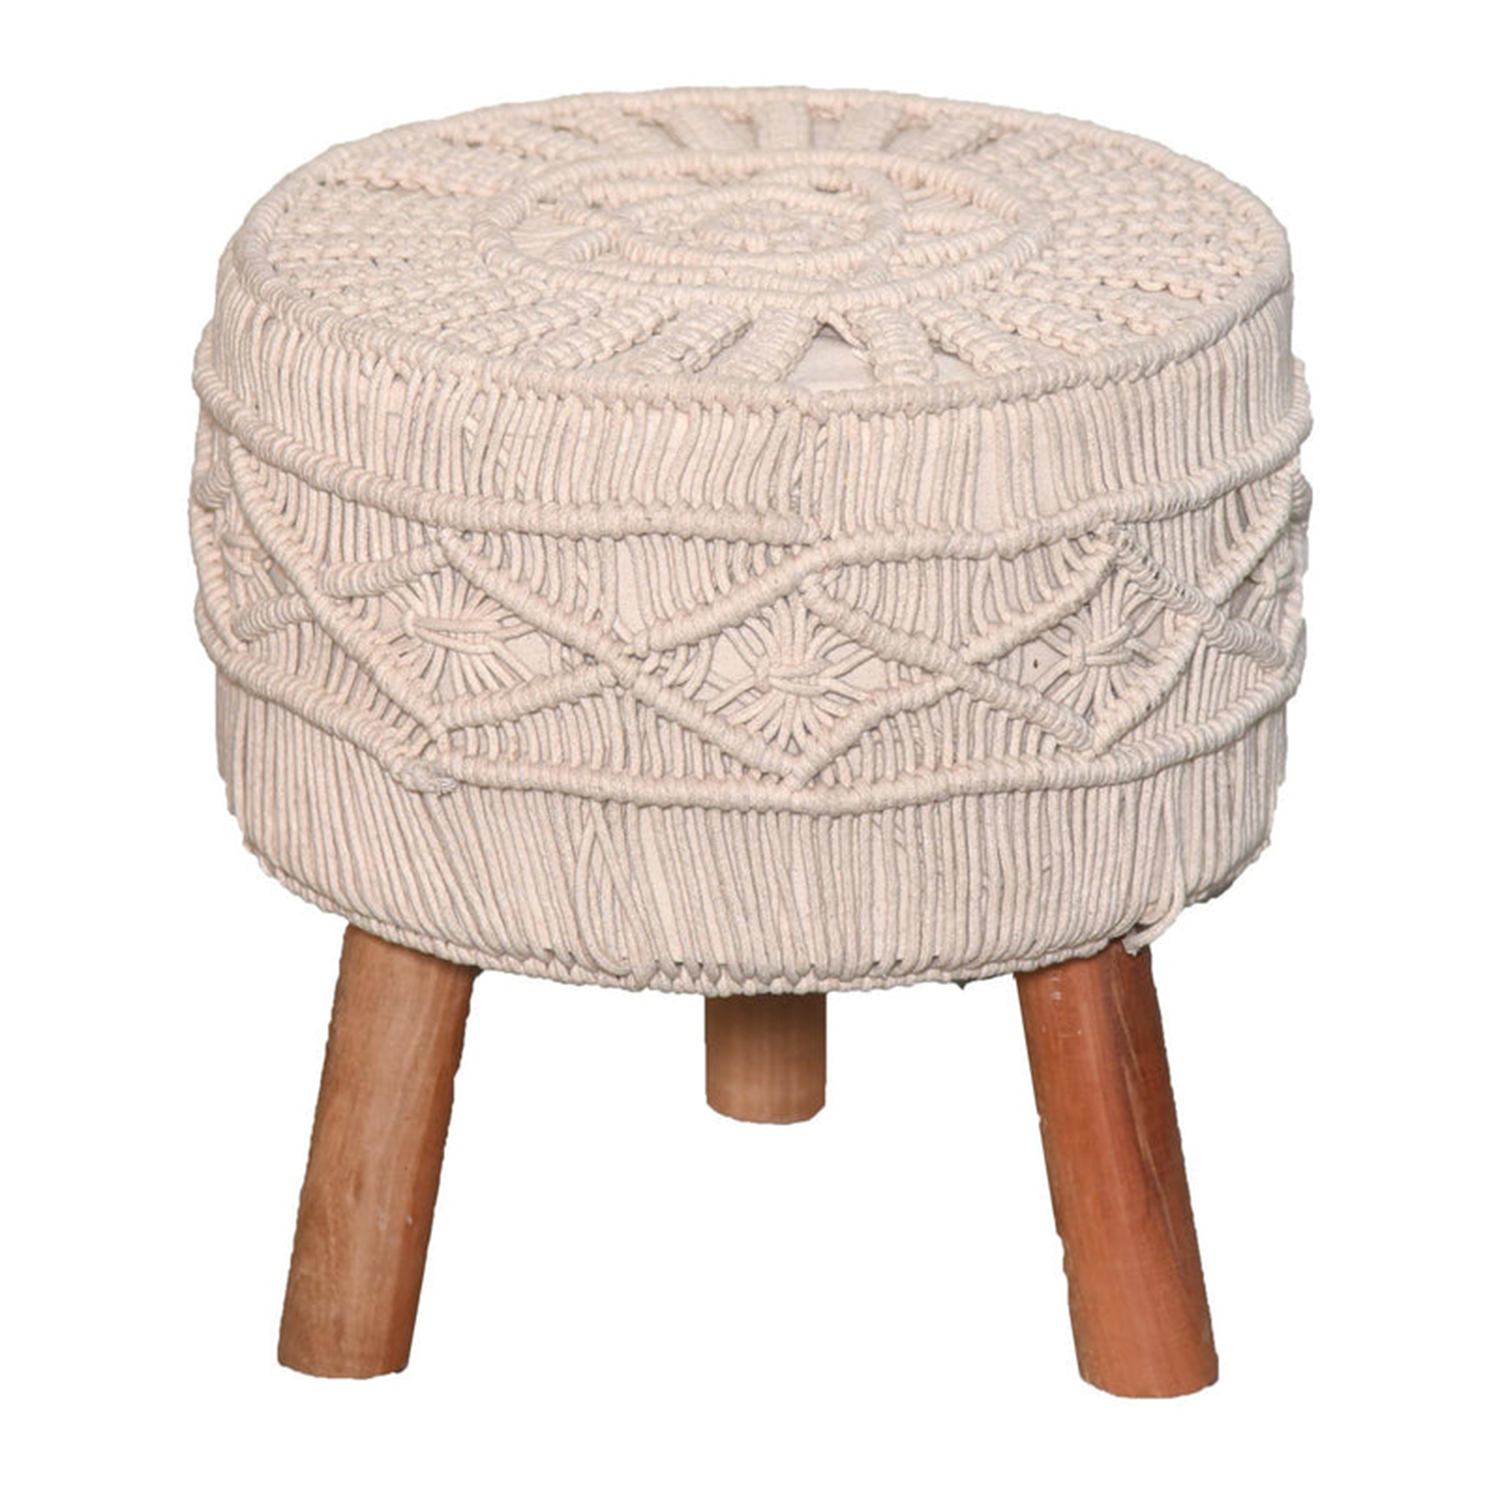 bohemian handmade furniture macrame ottoman stools manufacturer, Supplier and exporter